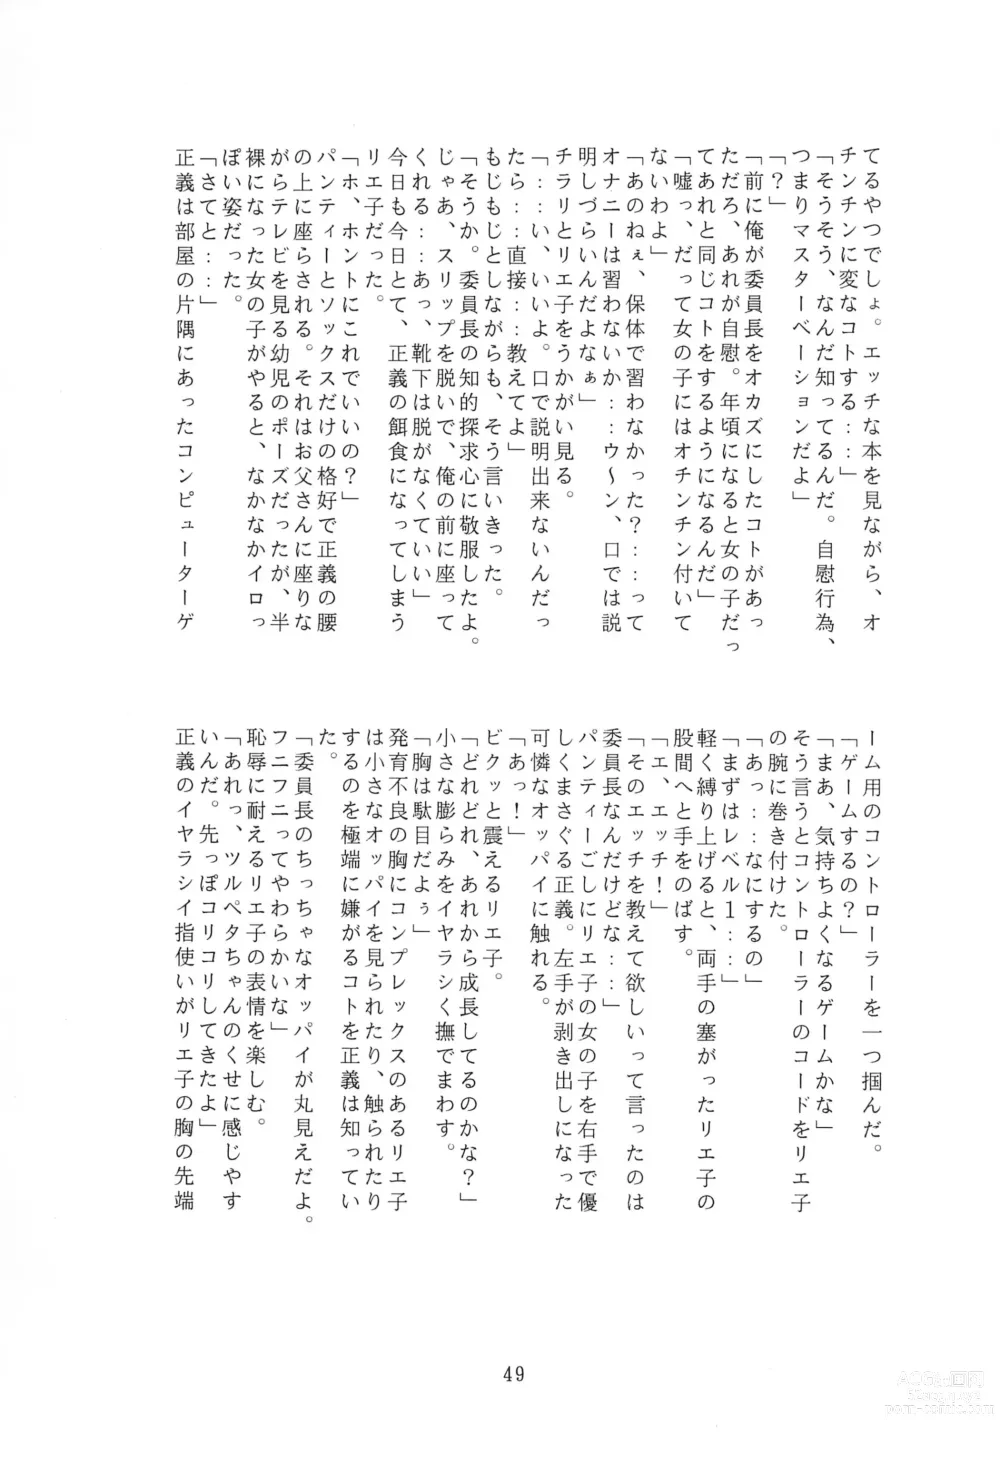 Page 49 of doujinshi JANGLE ONI Mermaid